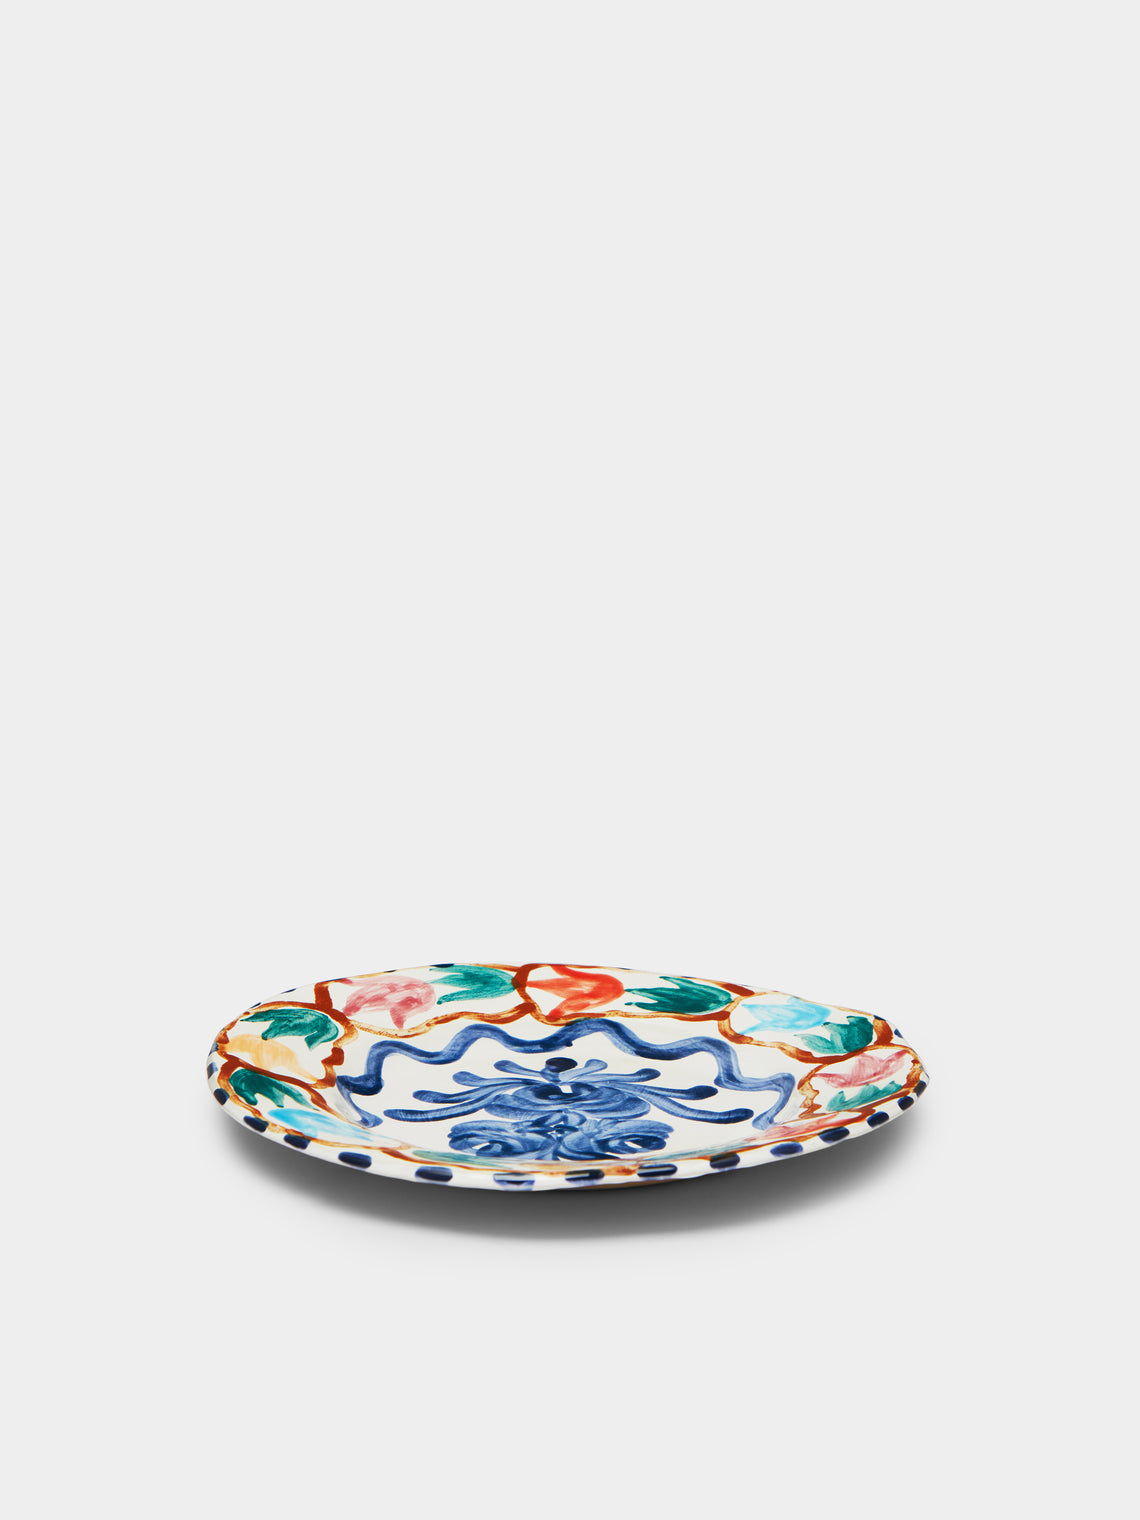 Zsuzsanna Nyul - Hand-Painted Ceramic Dessert Plates (Set of 4) -  - ABASK